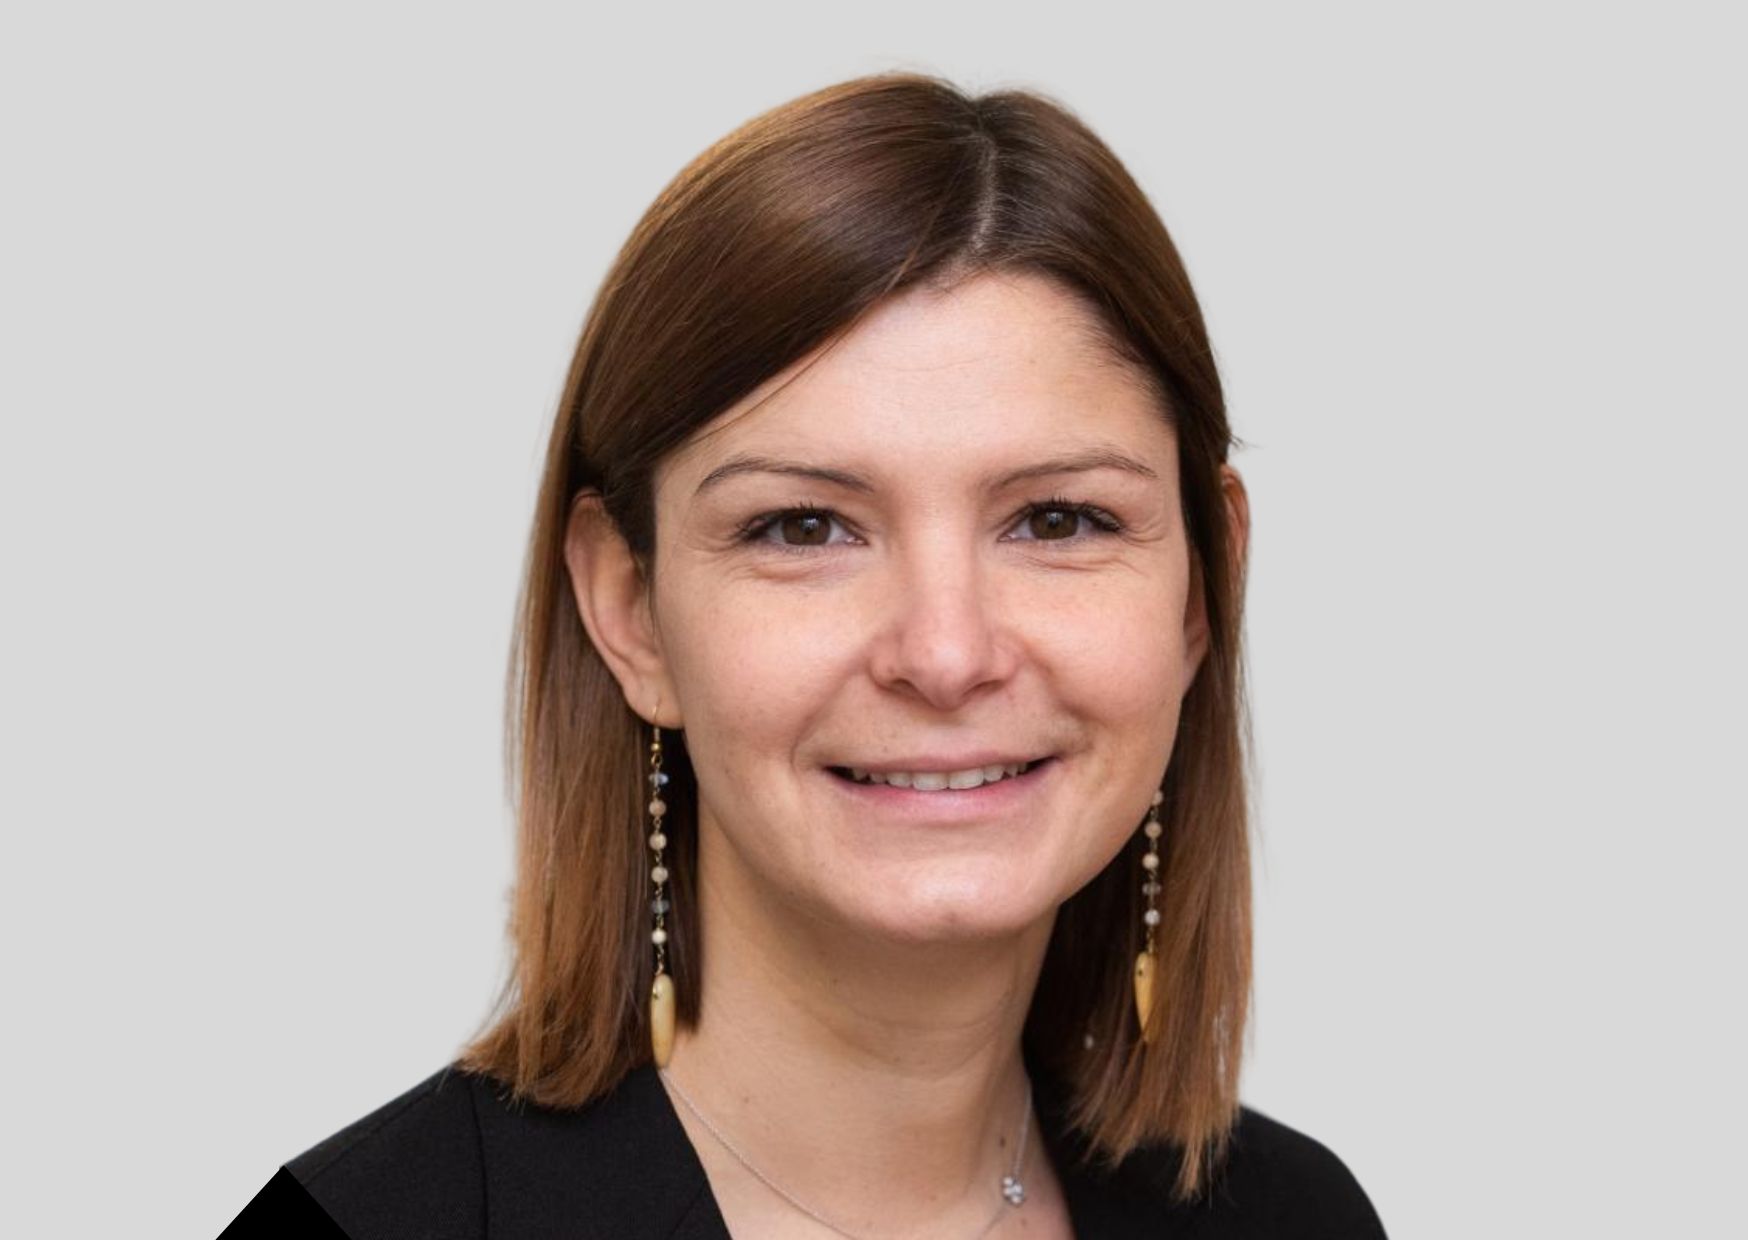 Federica Cherubini, Director of Leadership Development at the Reuters Institute.